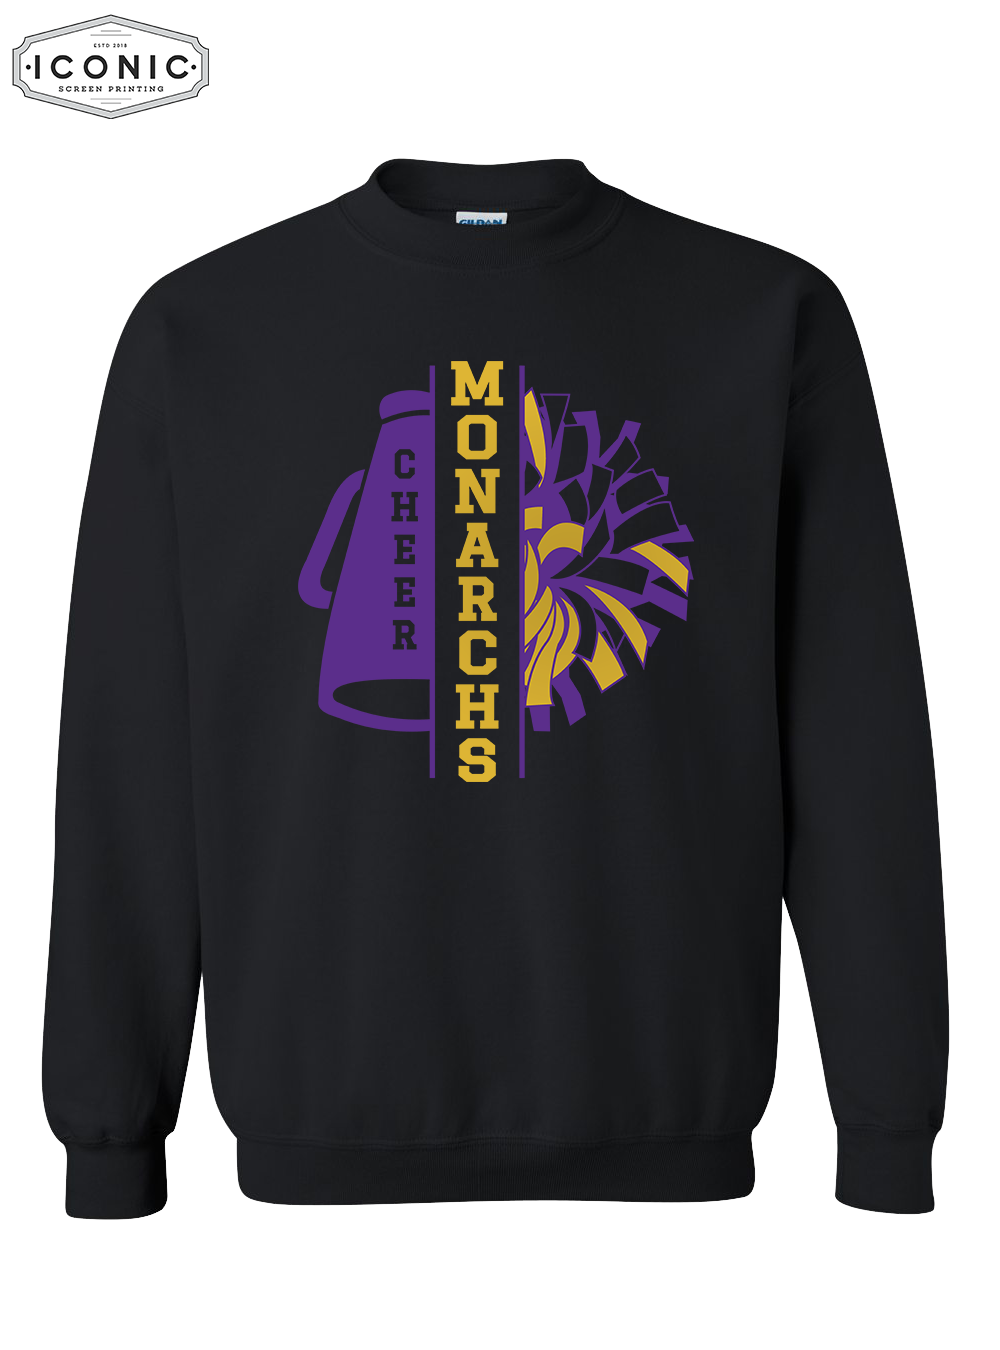 Monarch Cheer Pom (Glitter Print) - Heavy Blend Sweatshirt